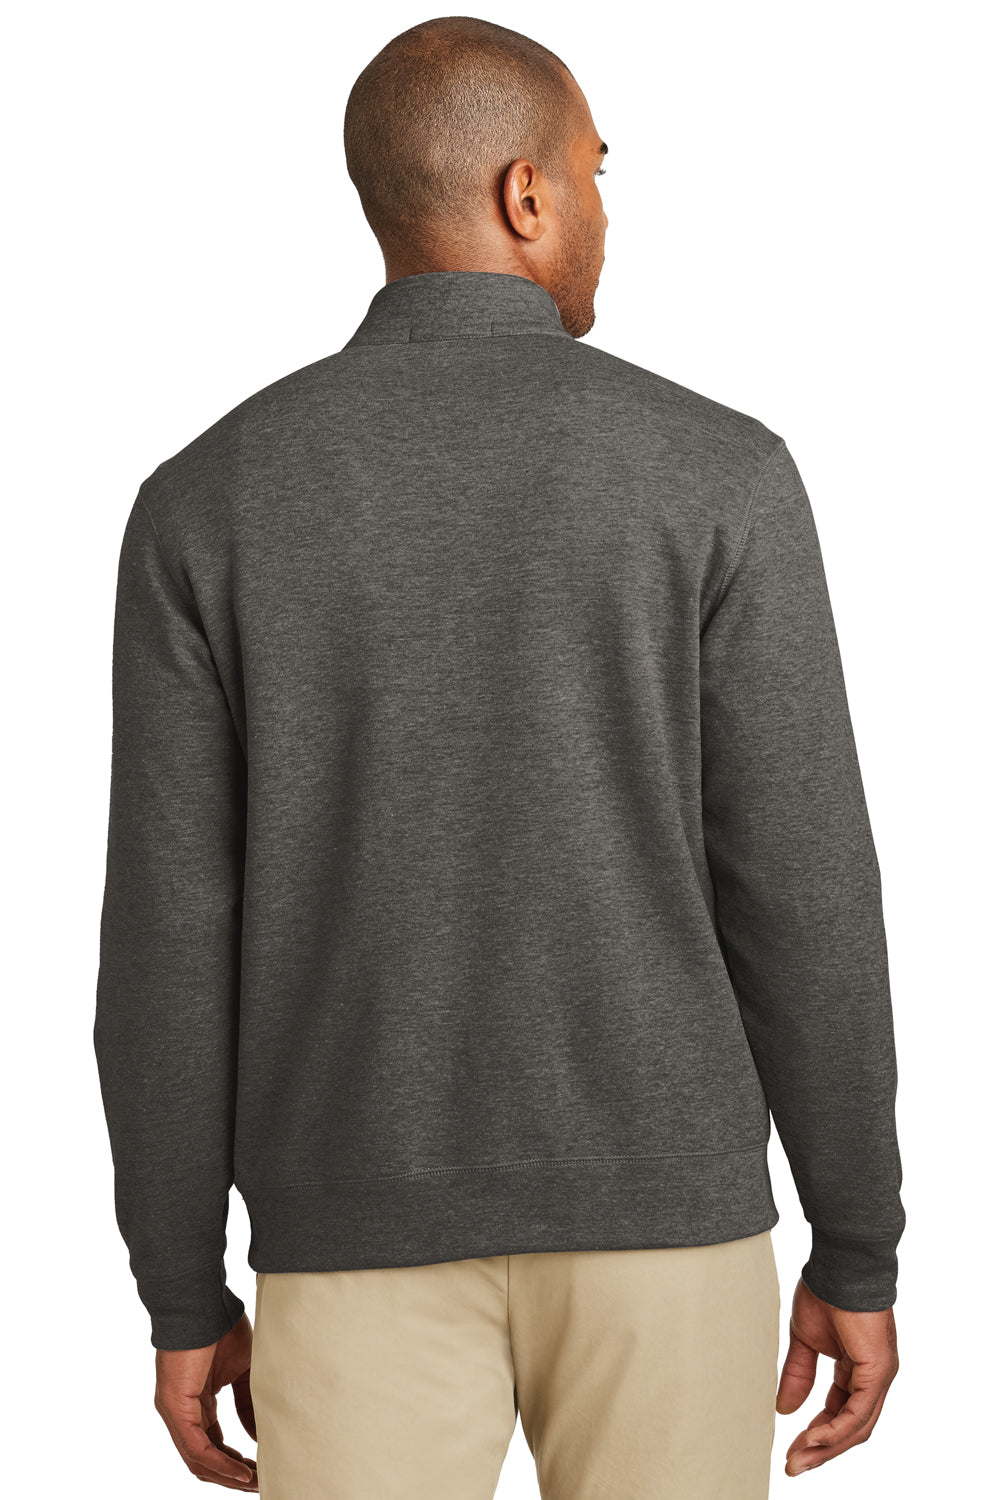 Port Authority K807 Mens 1/4 Zip Long Sleeve Sweater Heather Charcoal Grey Back